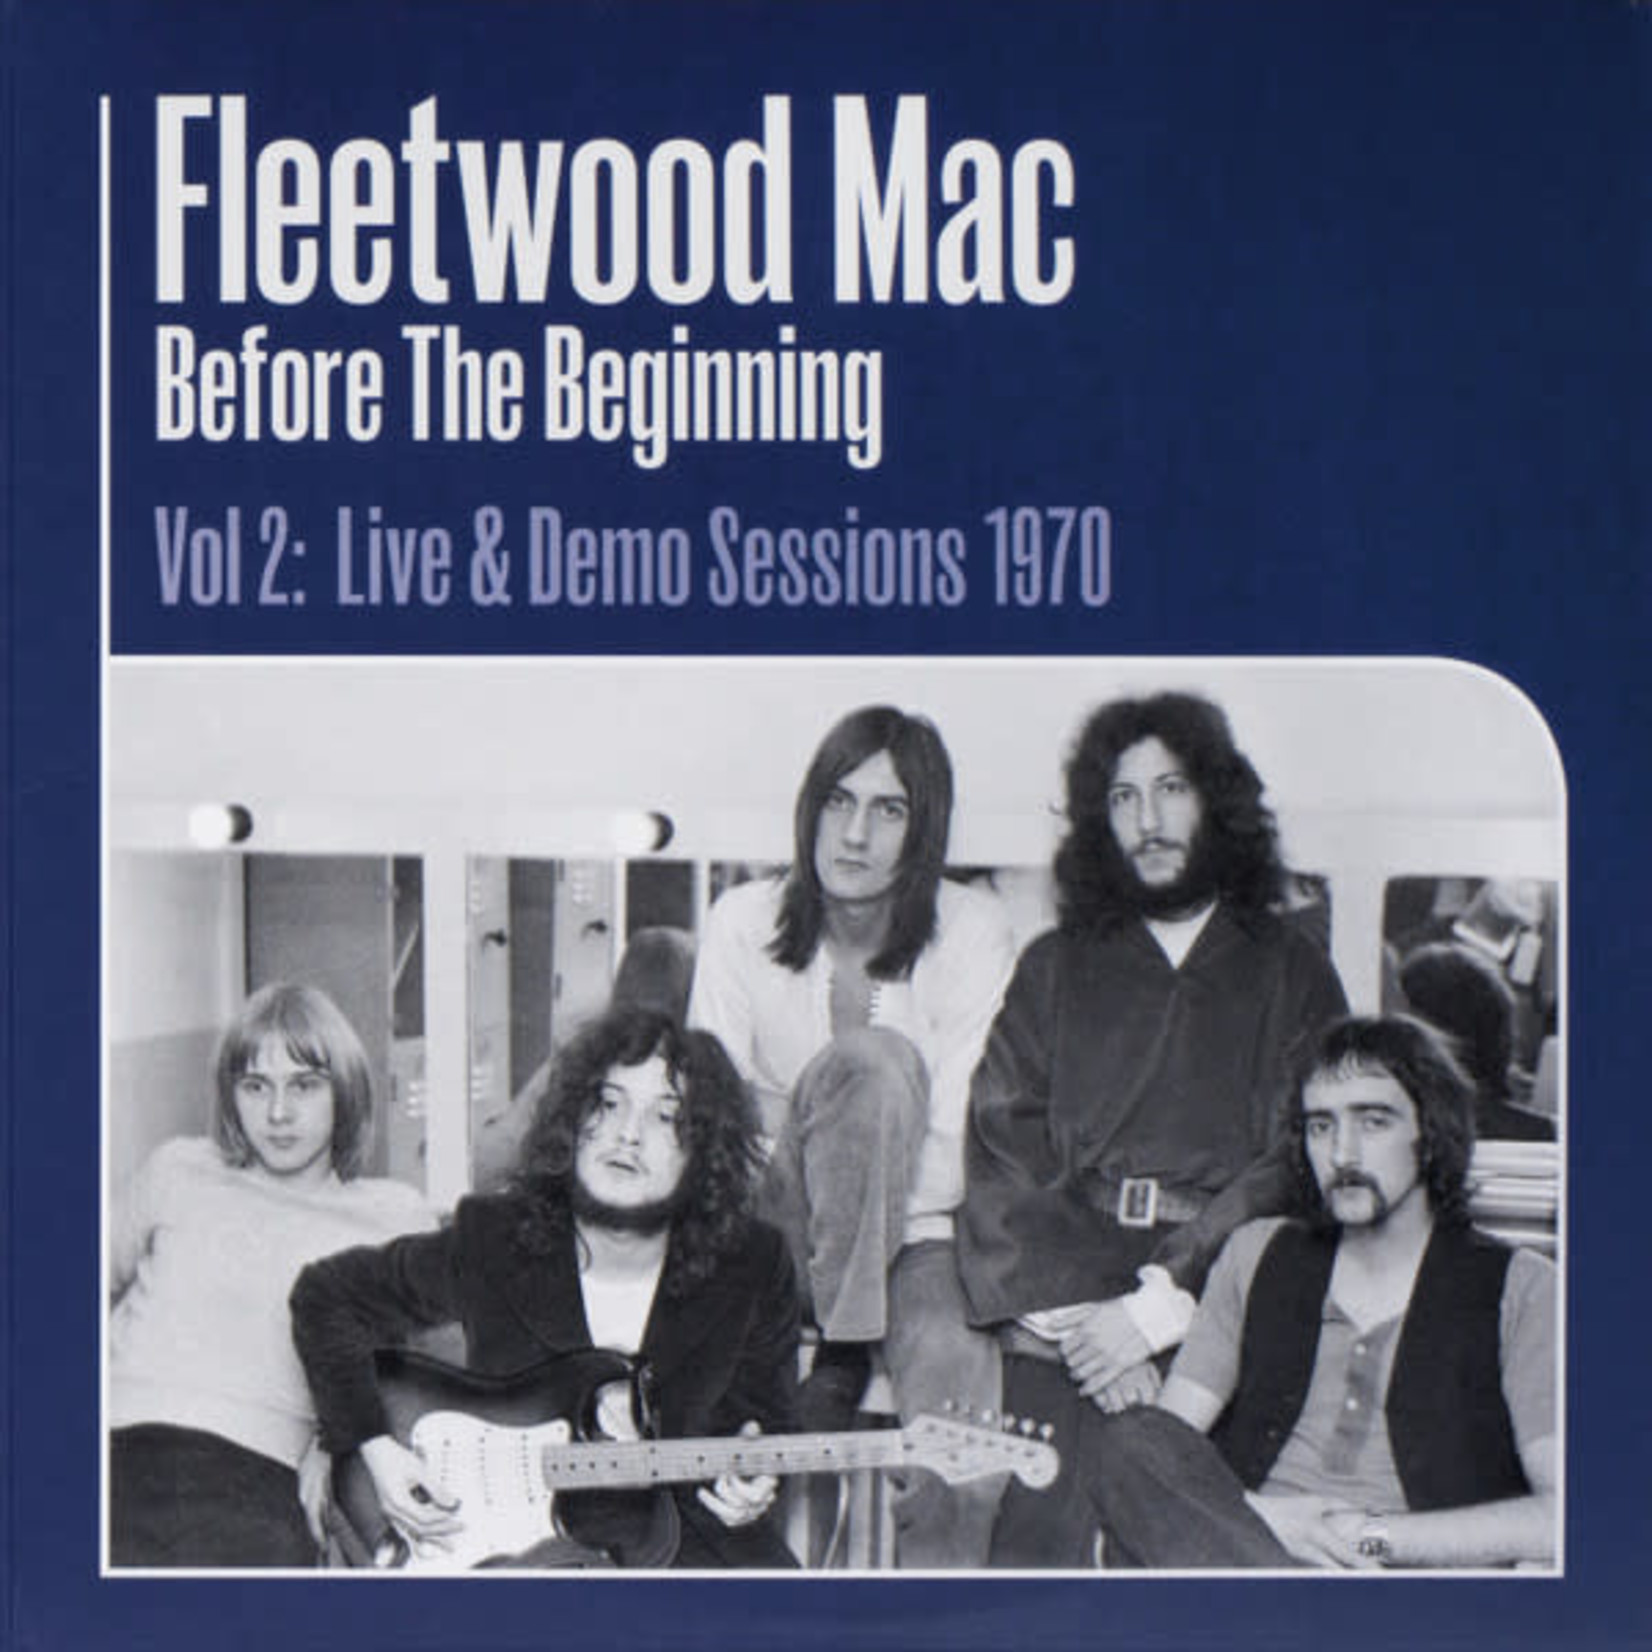 Fleetwood Mac - Before The Beginning Vol. 2: Live & Demo Sessions 1970